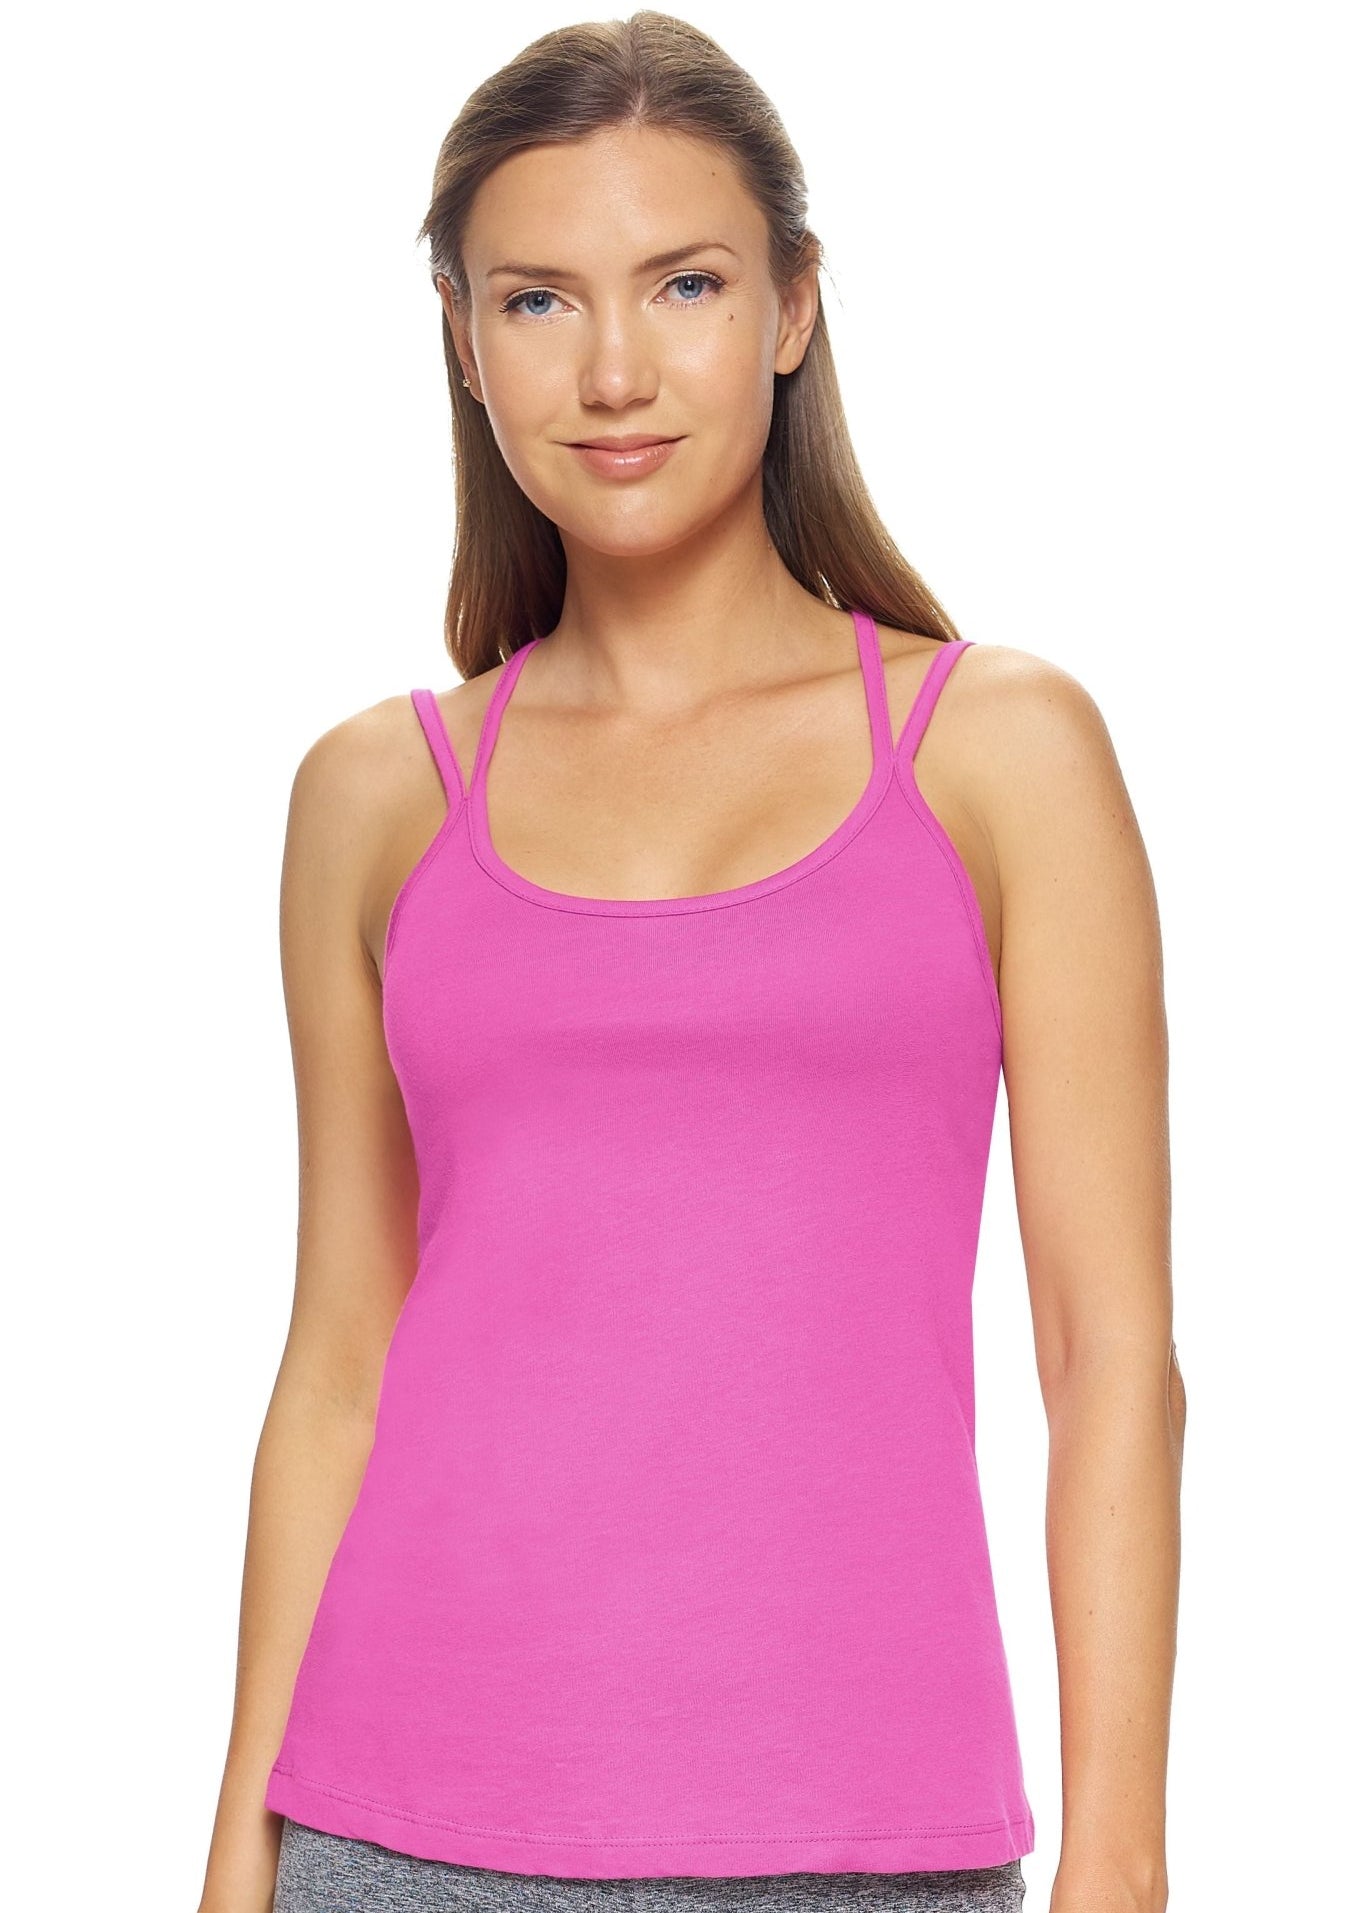 Expert Brand MoCA Plant Based Strappy Cami Shirt - DressbarnActivewear